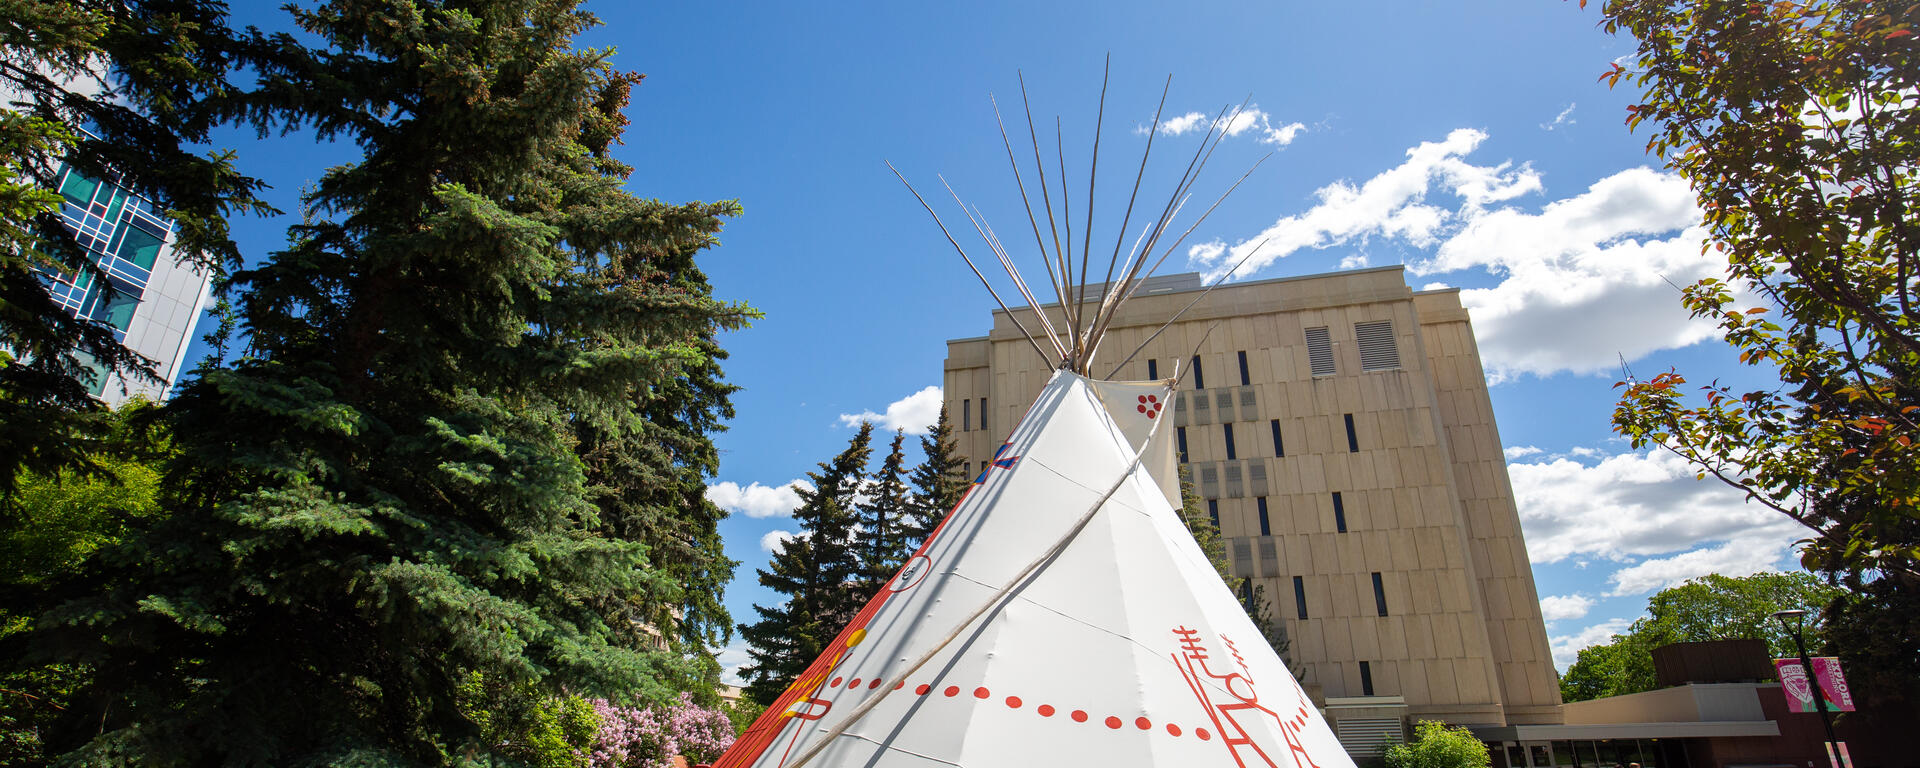 The University of Calgary campus in June 2022.